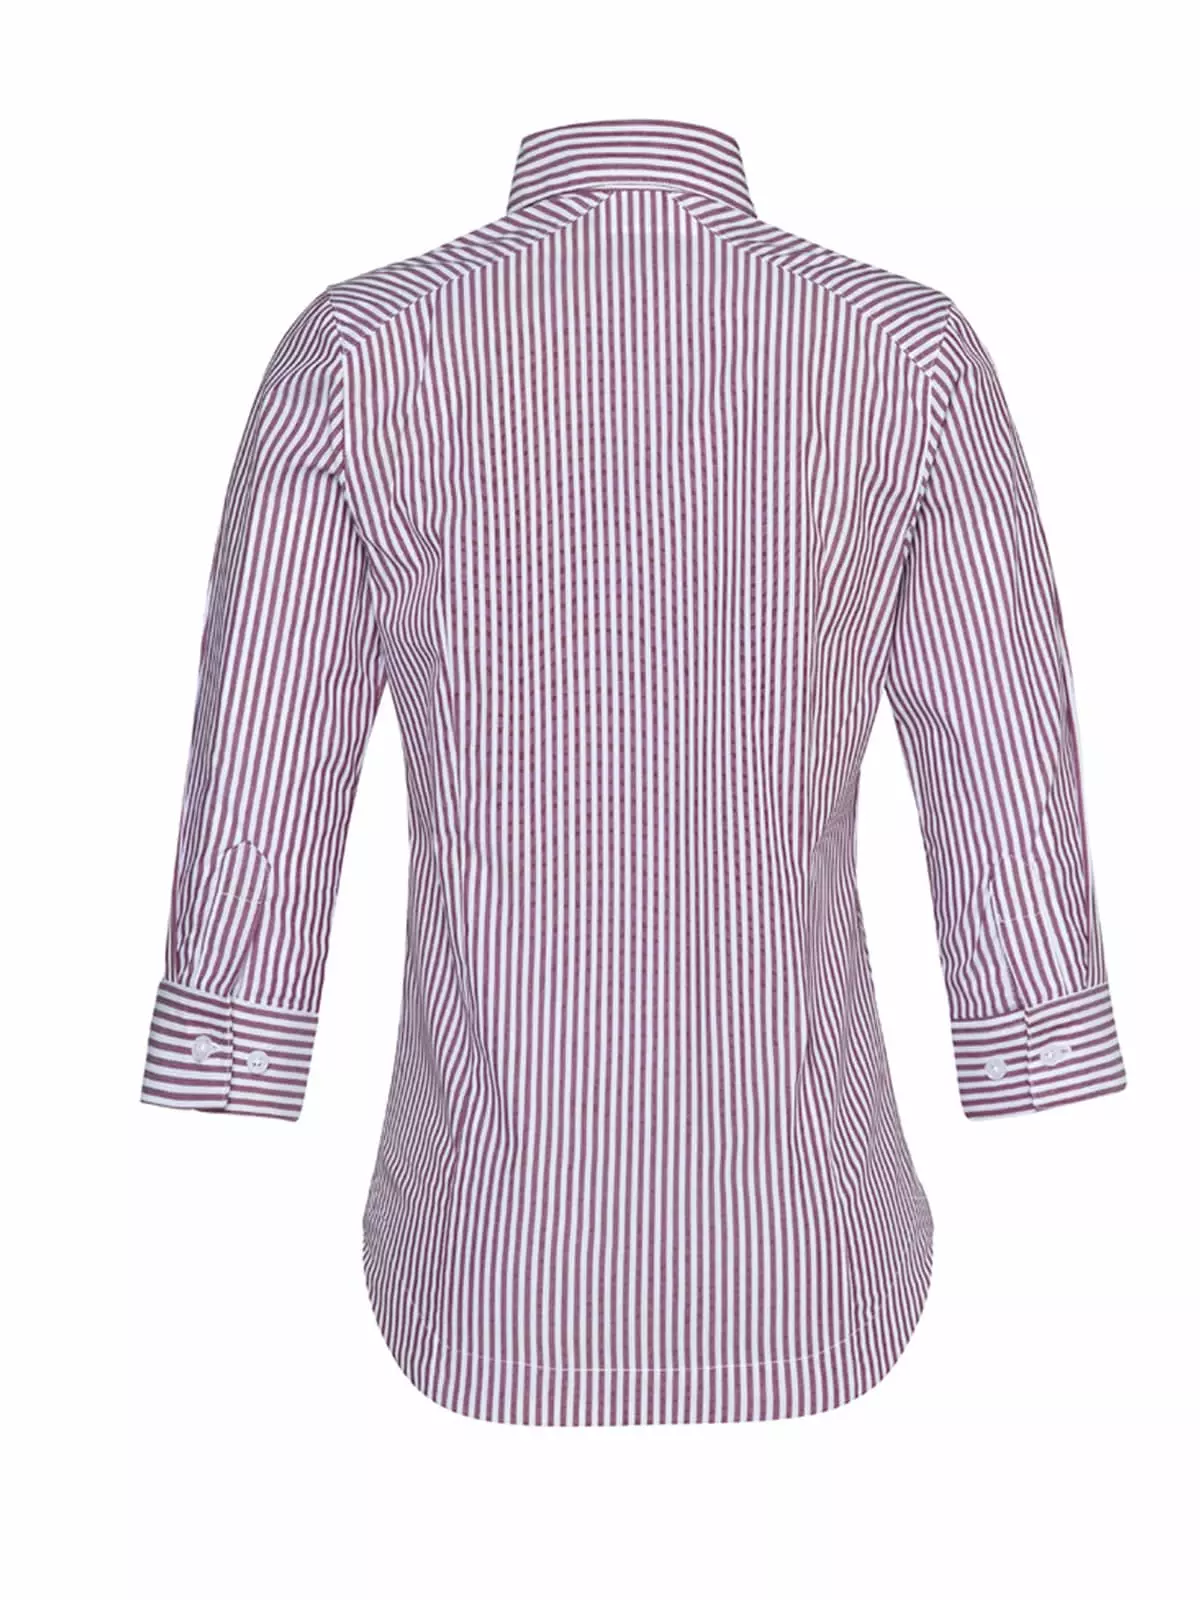 Striped blouse burgundy